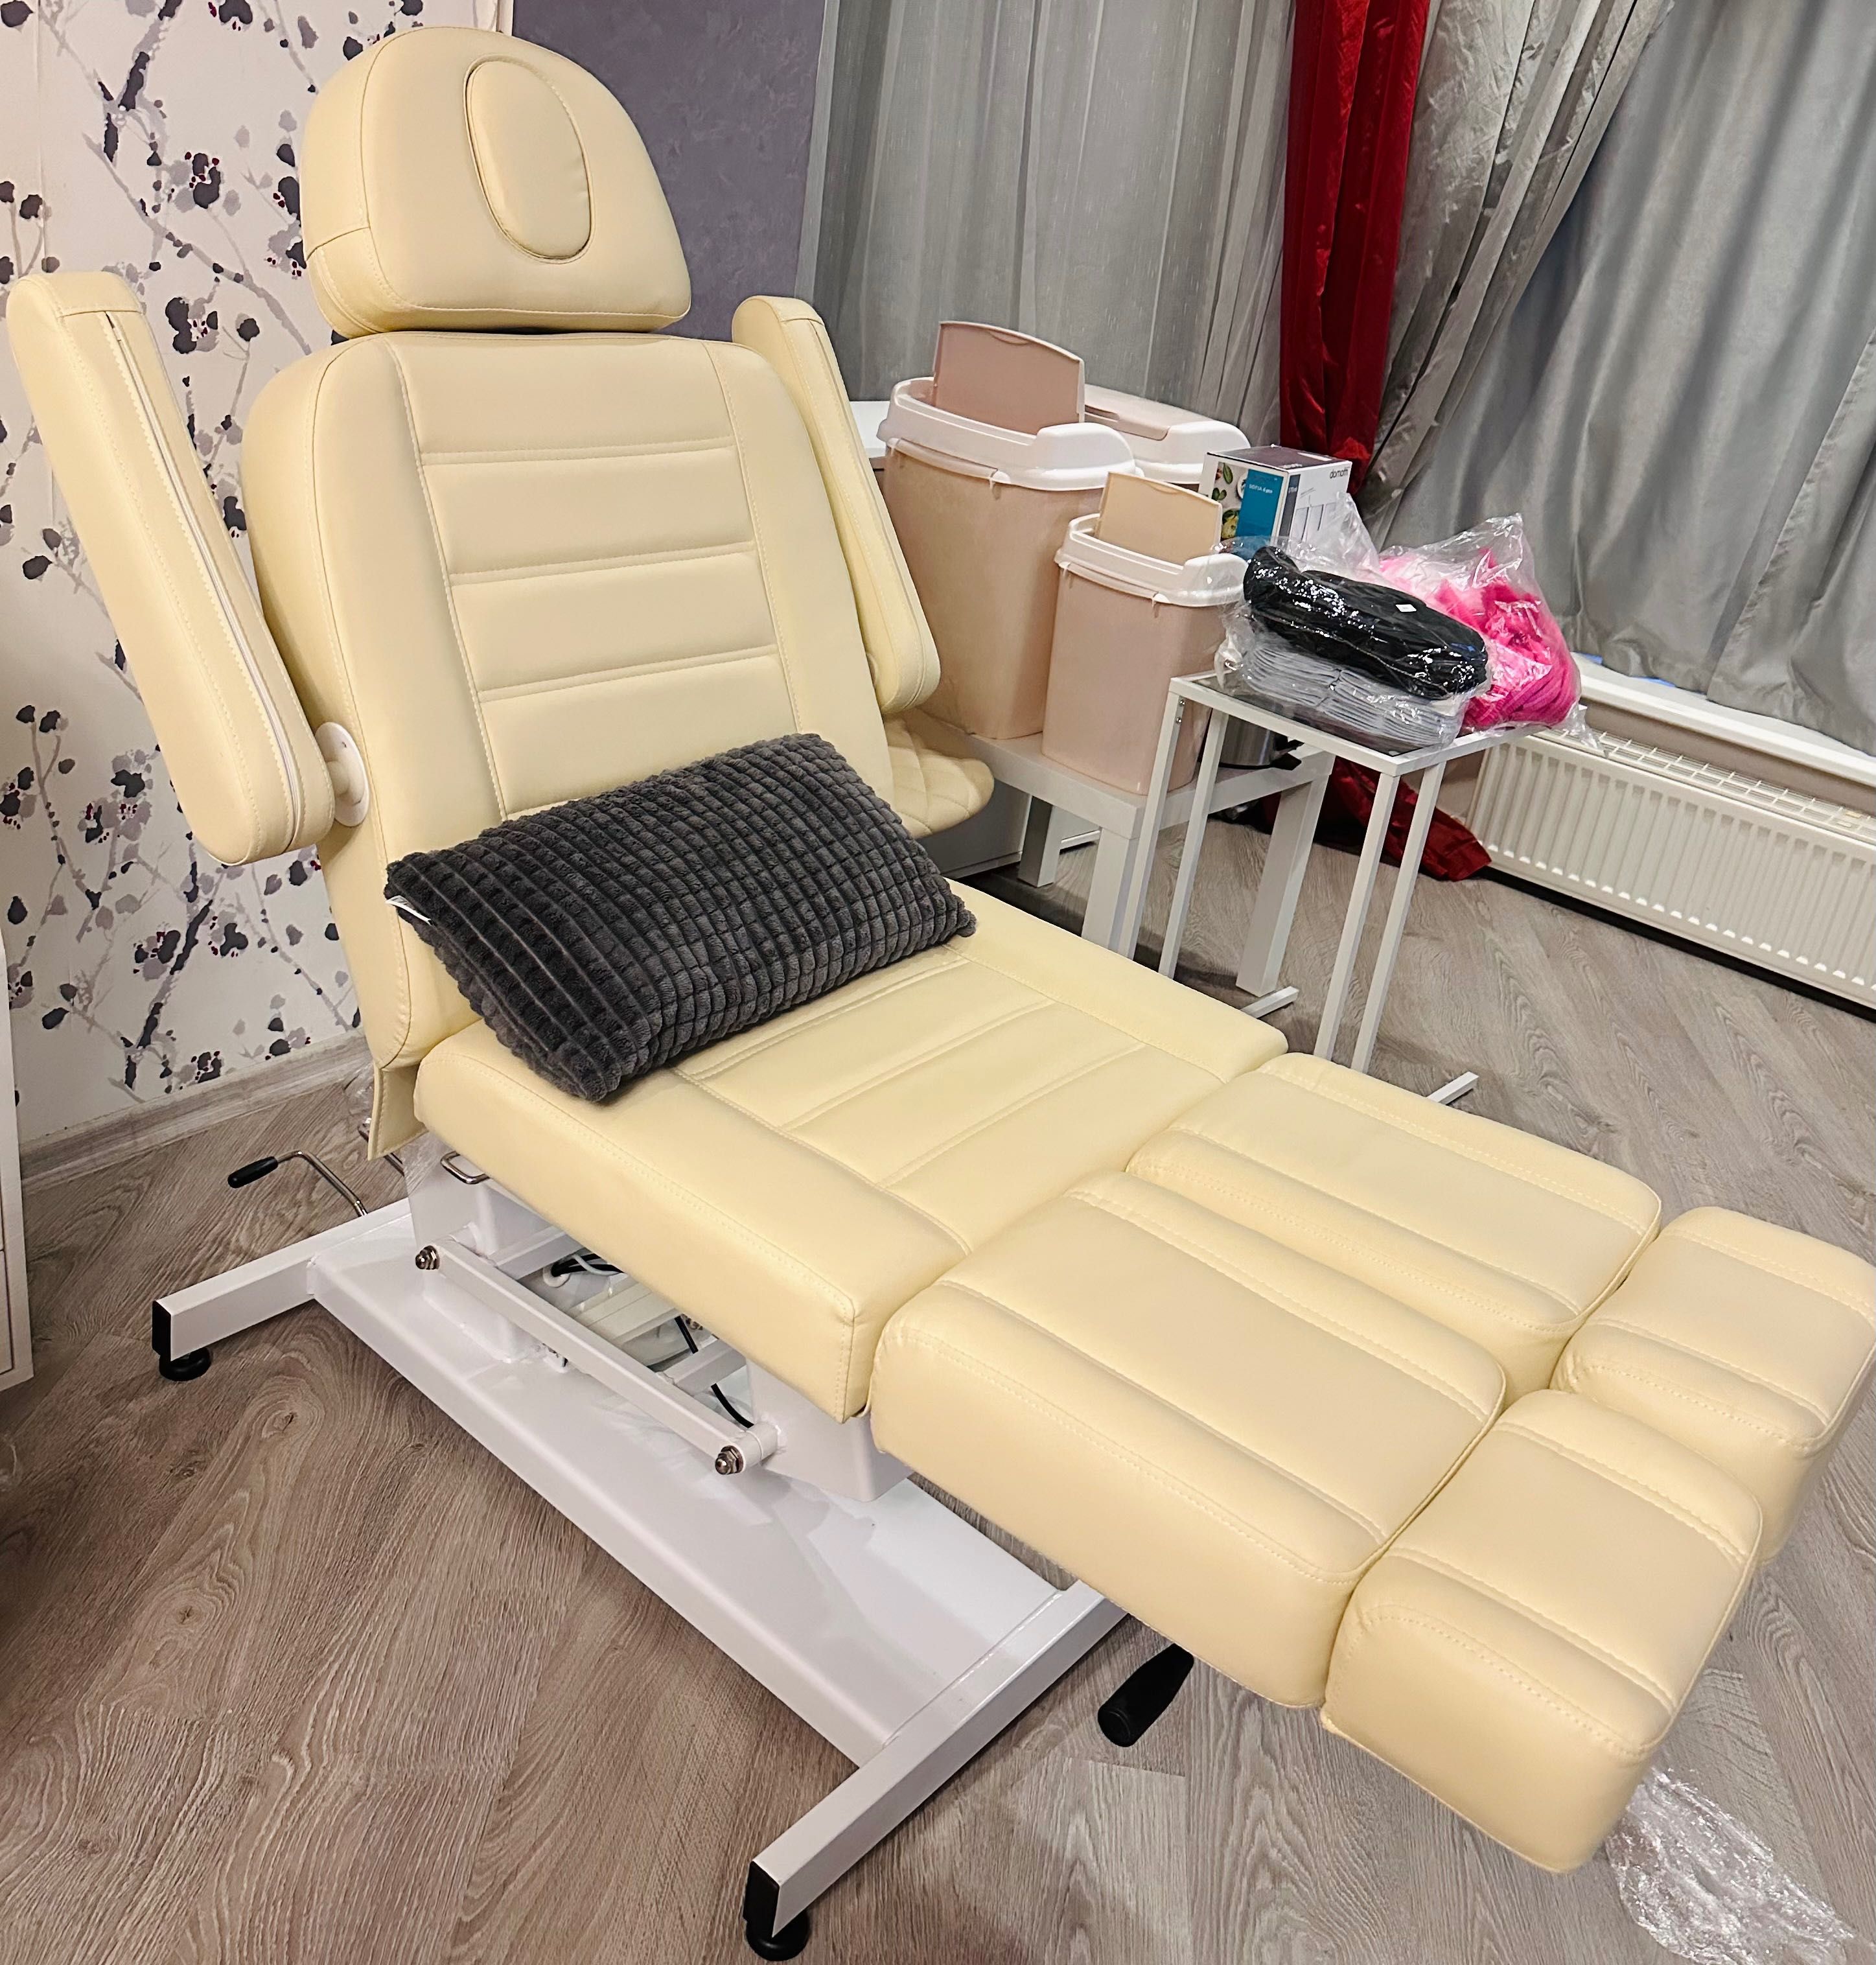 Педікюрне крісло педикюрное кресло кушетка массаж косметология педикюр